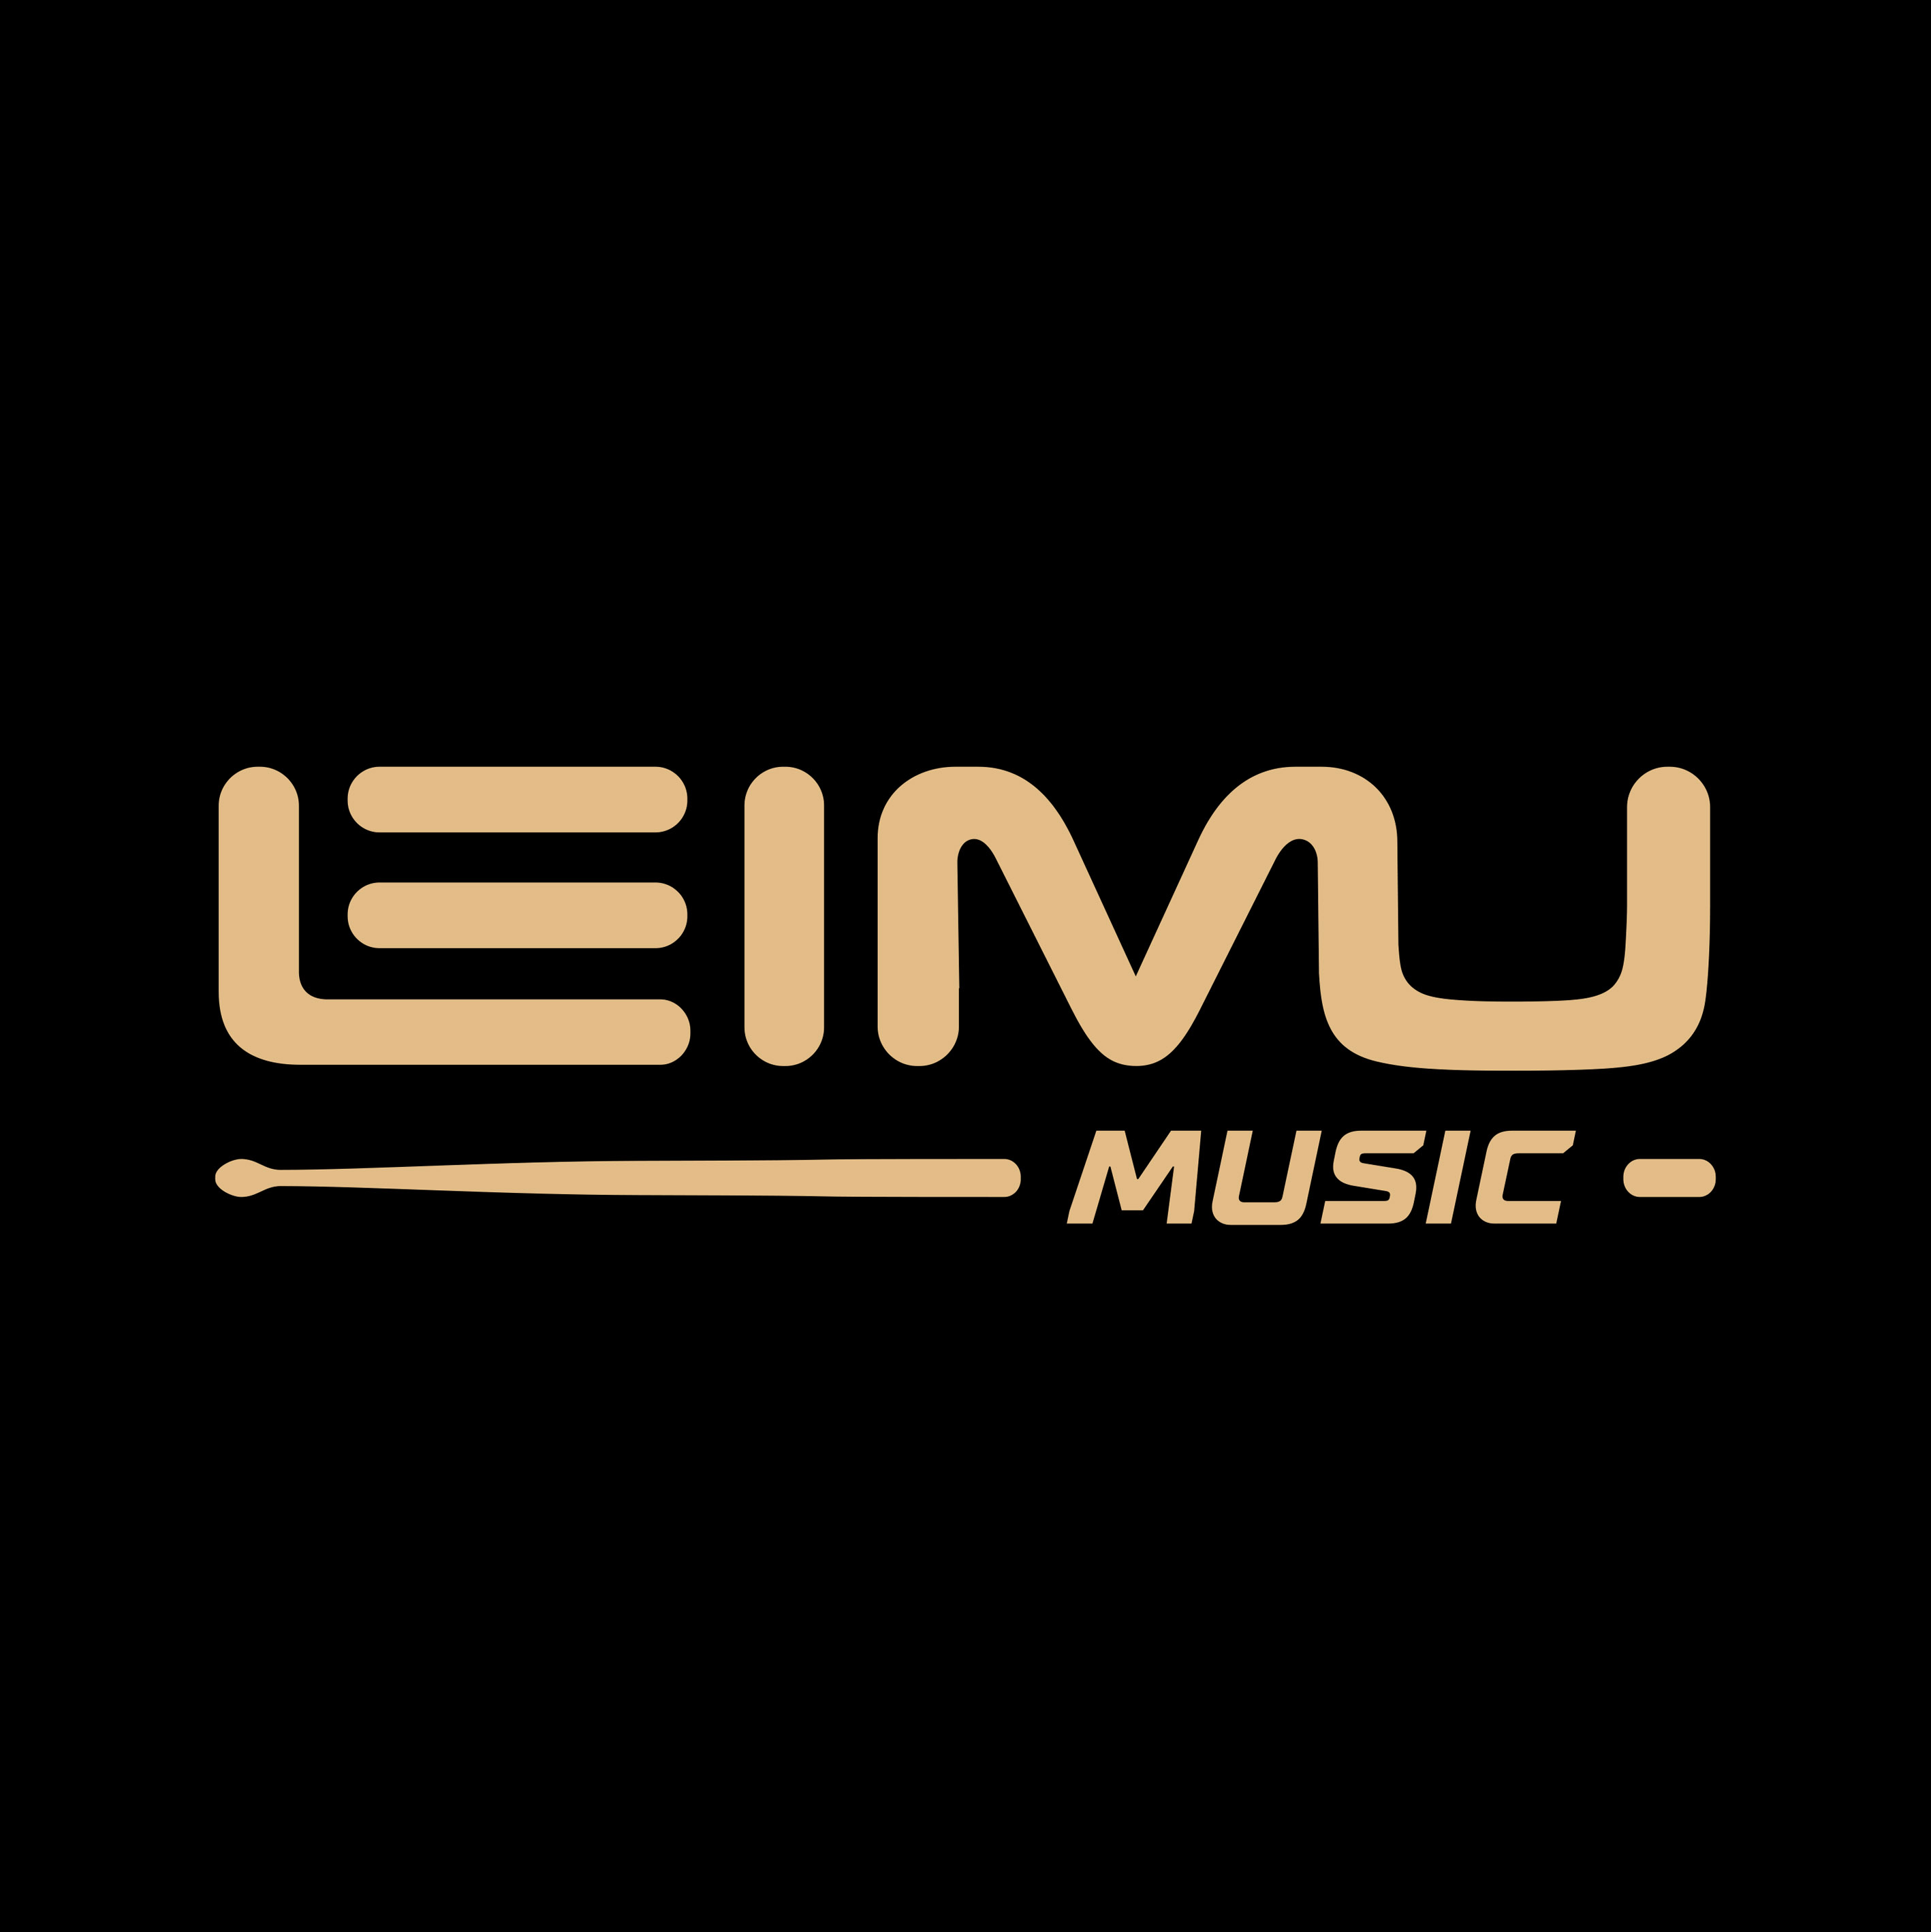 Leimu Music logo, Therwiz Design, Mika Tervaskangas logonsuunnittelu, yritysilme, liikemerkki Pietarsaari, Pohjanmaa, Suomi